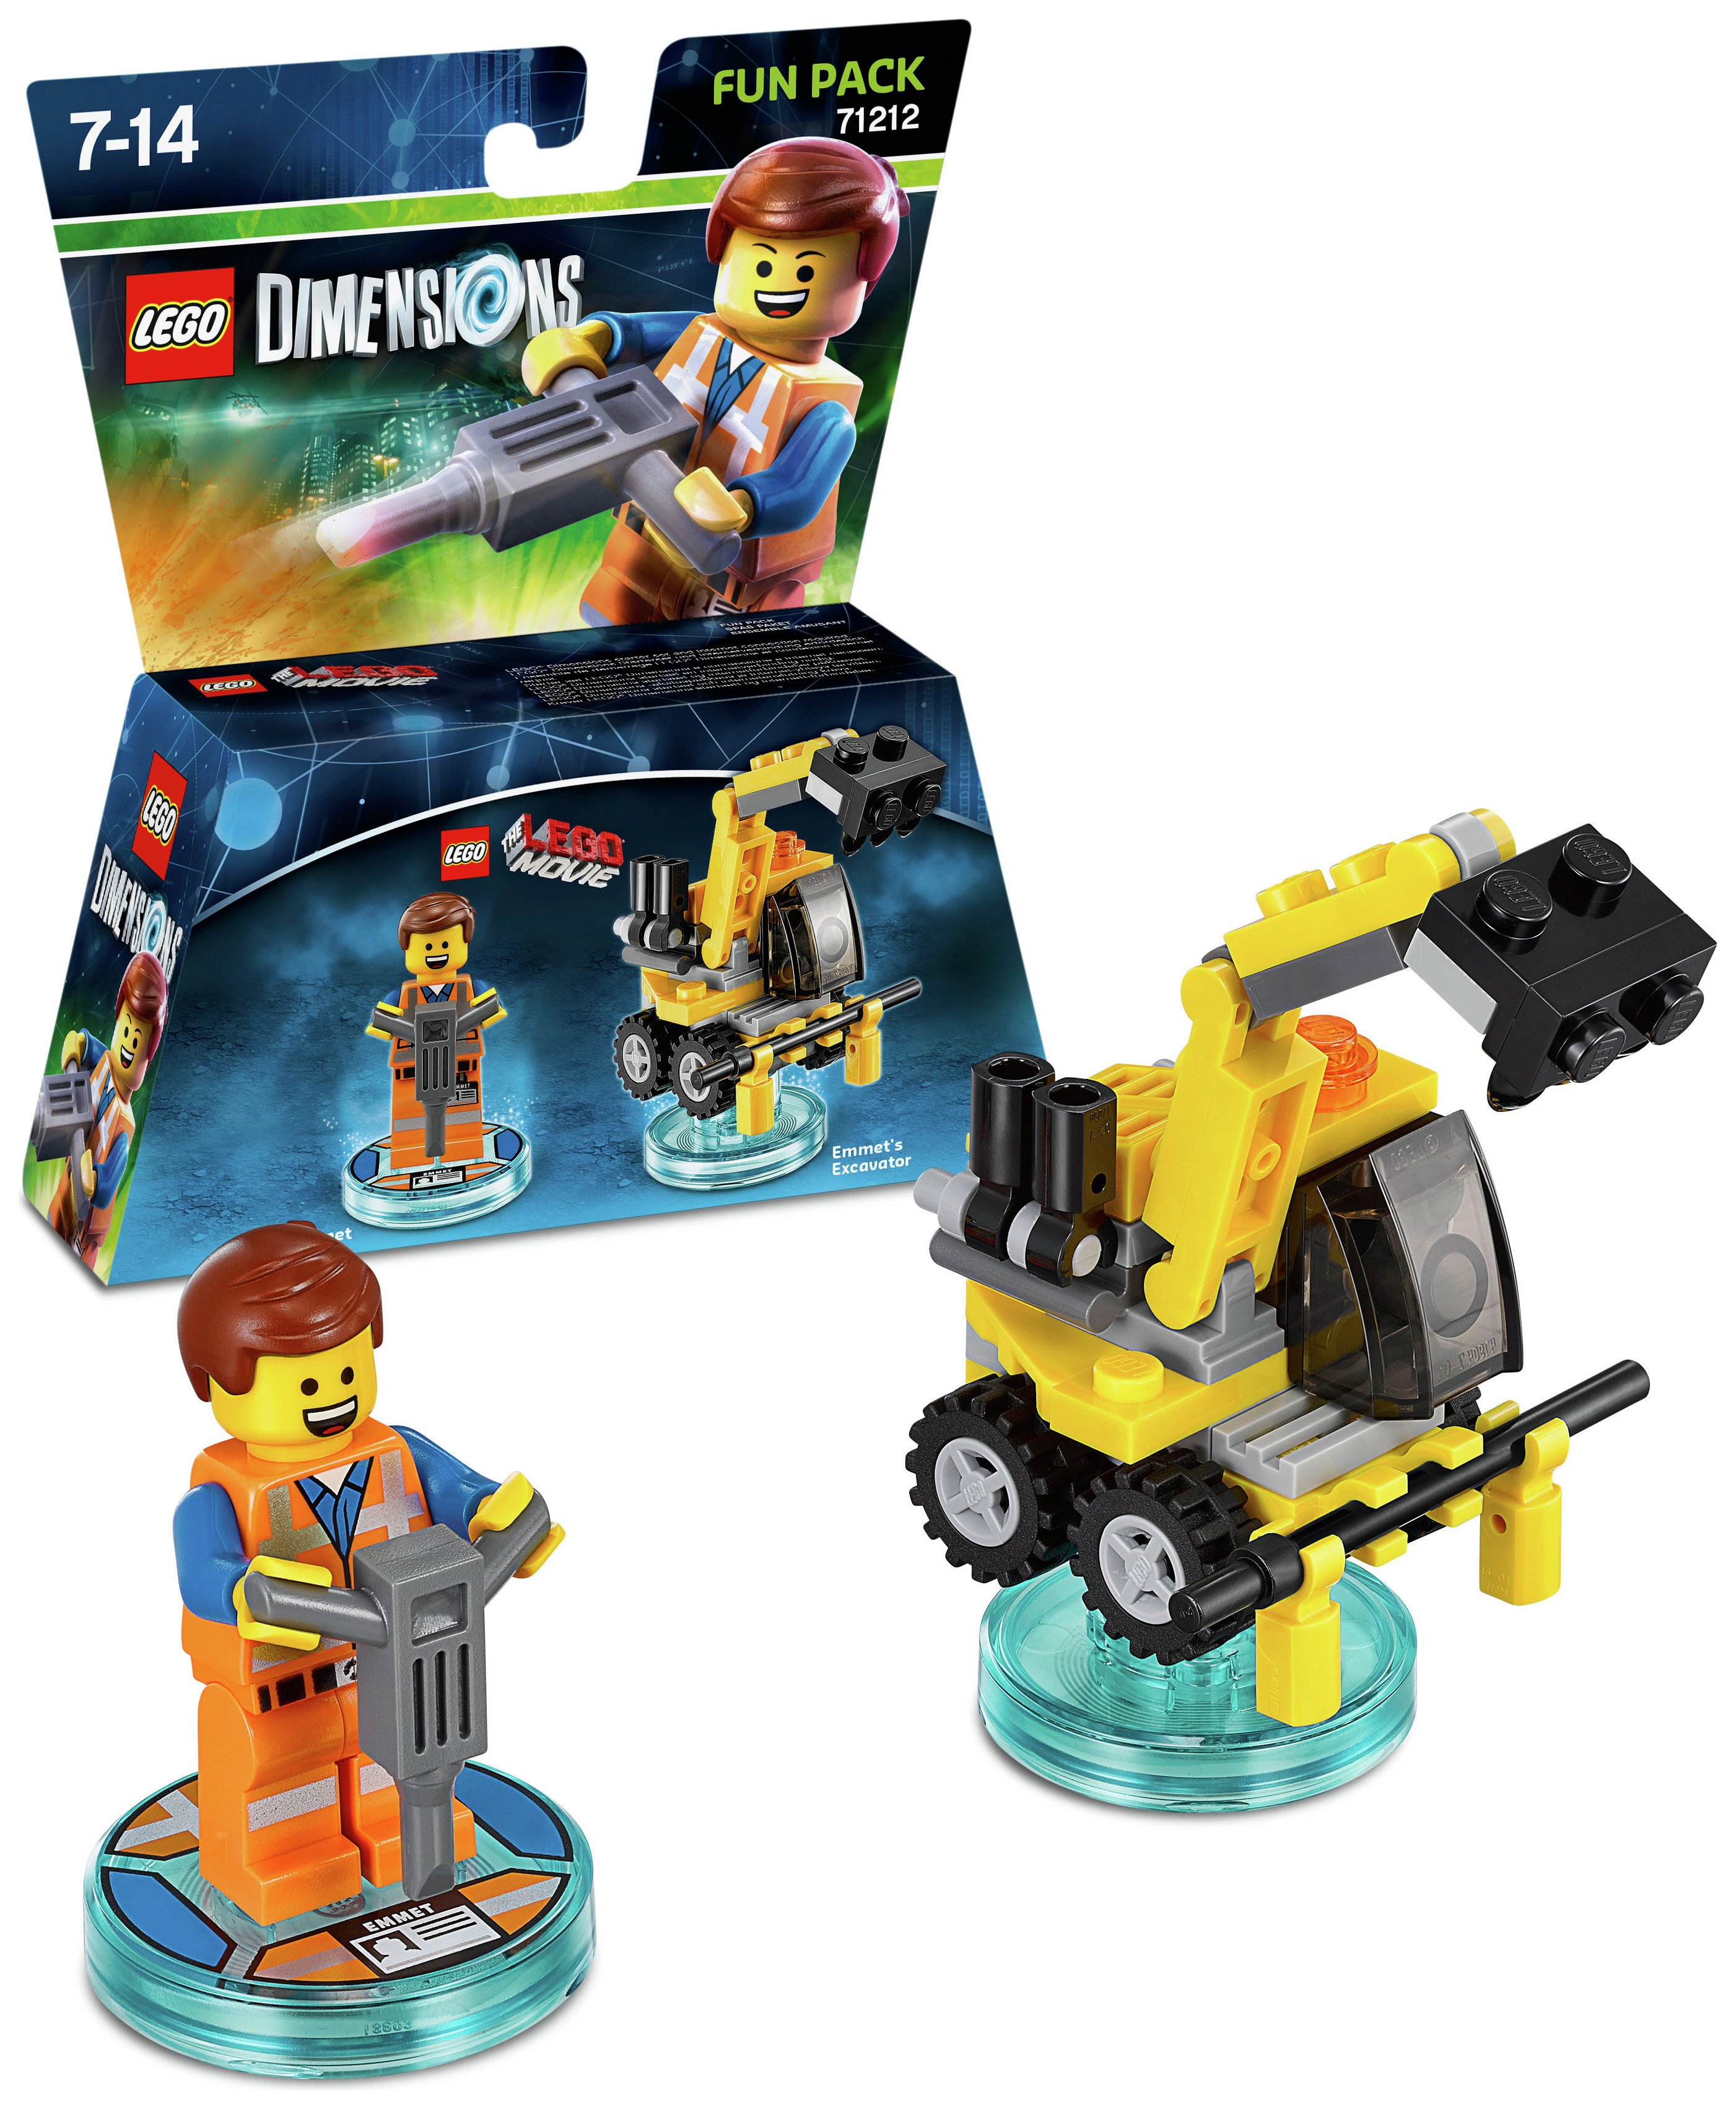 LEGO Dimensions: Emmet Fun Pack